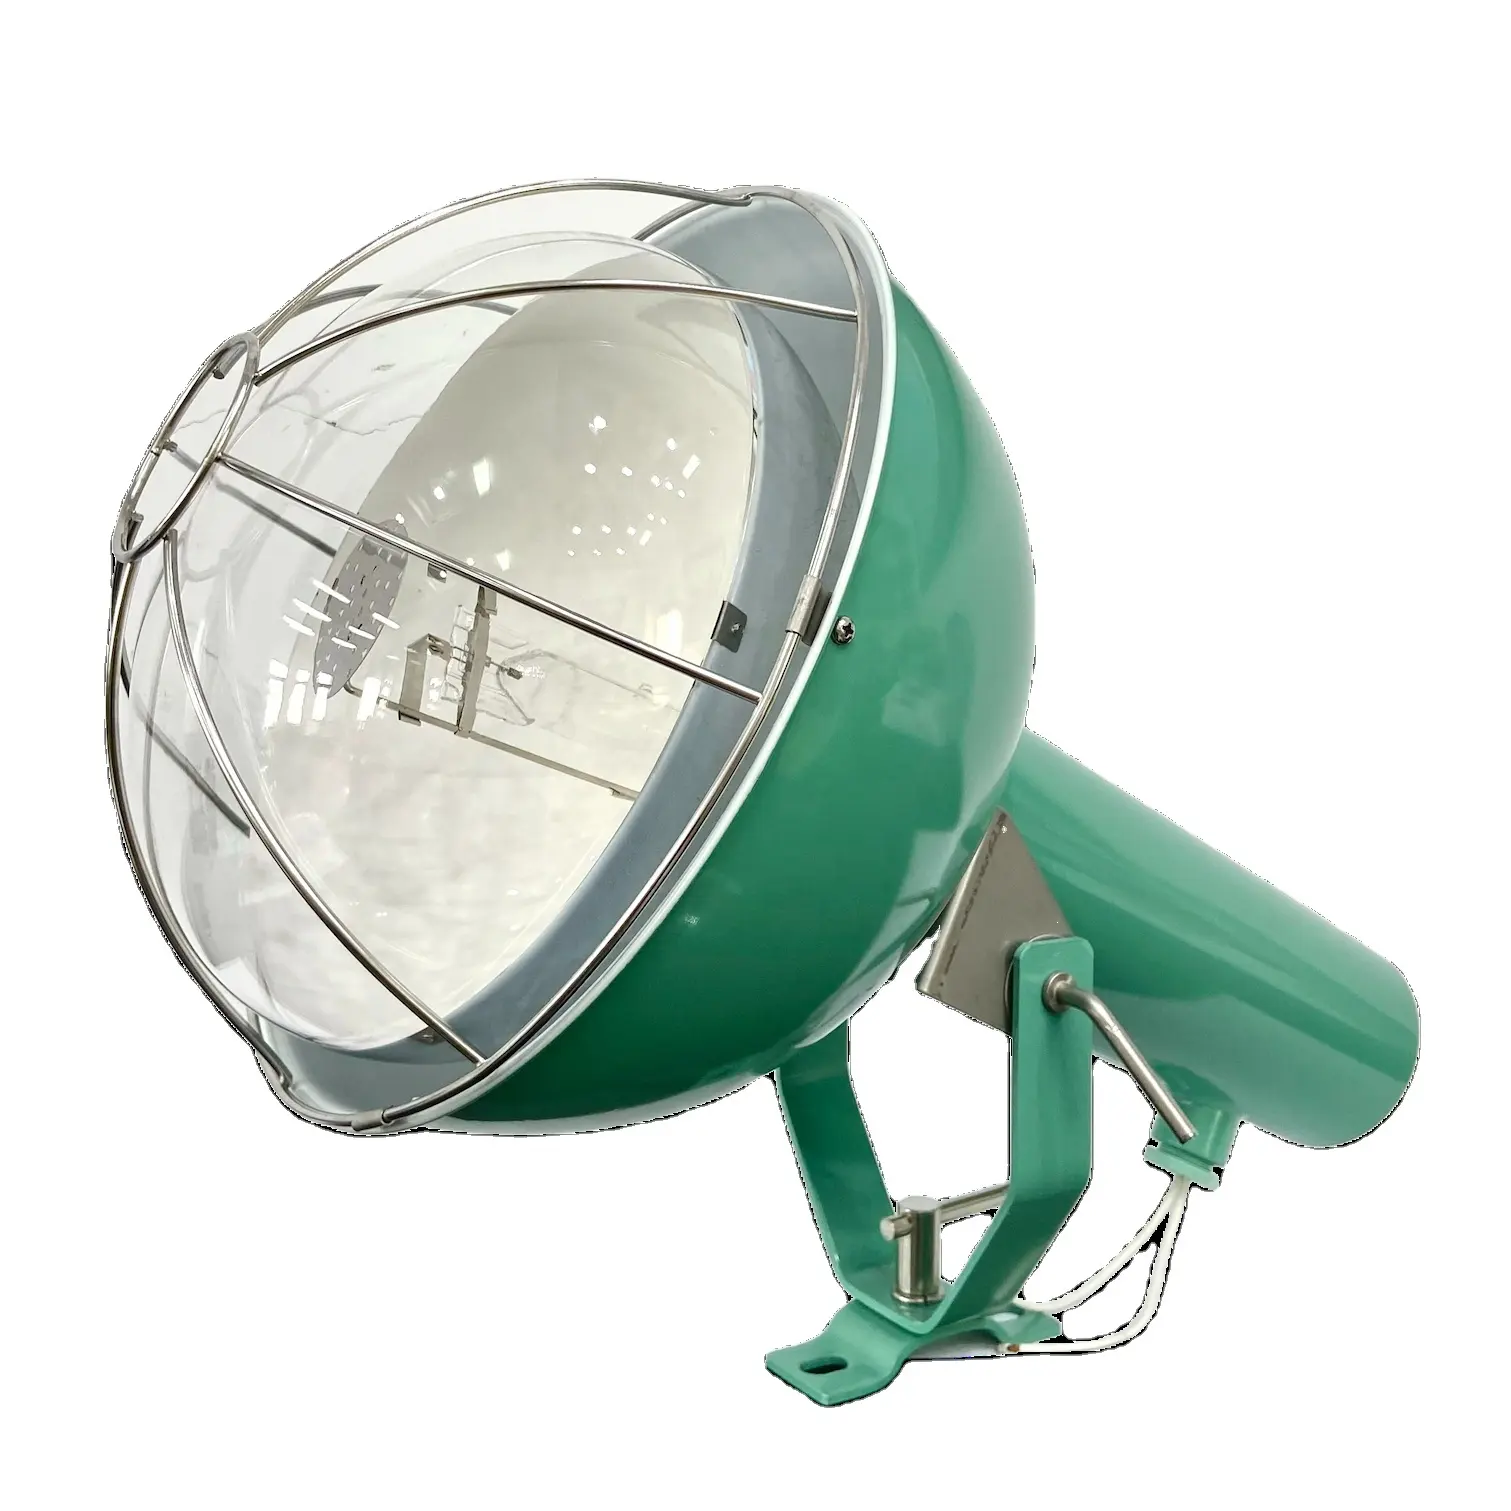 Mercury Lamp Lighting Fixtures Reflector fixture marine hrf 700w 1000w mercury lamp